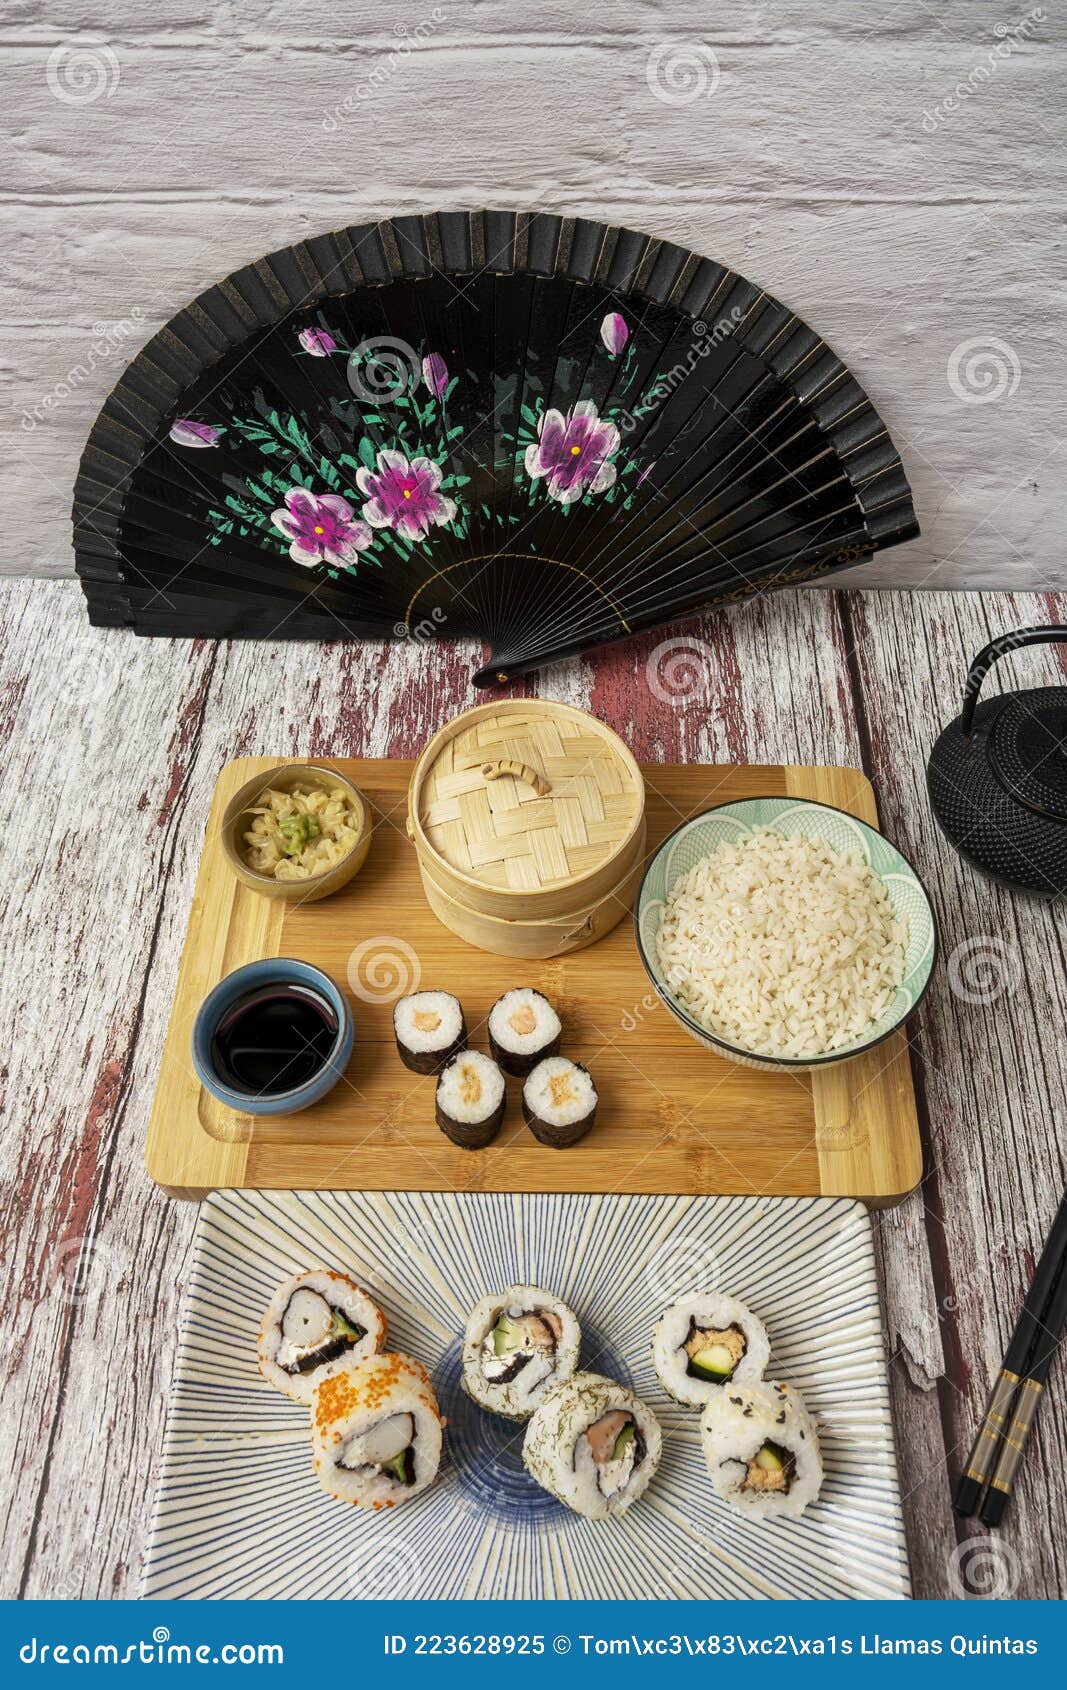 imagen tomada a cuarenta y cinco grados de platos de sushi con abanico negro, ginseng y wasabi, salsa de soja, tablero de bambÃÂº,